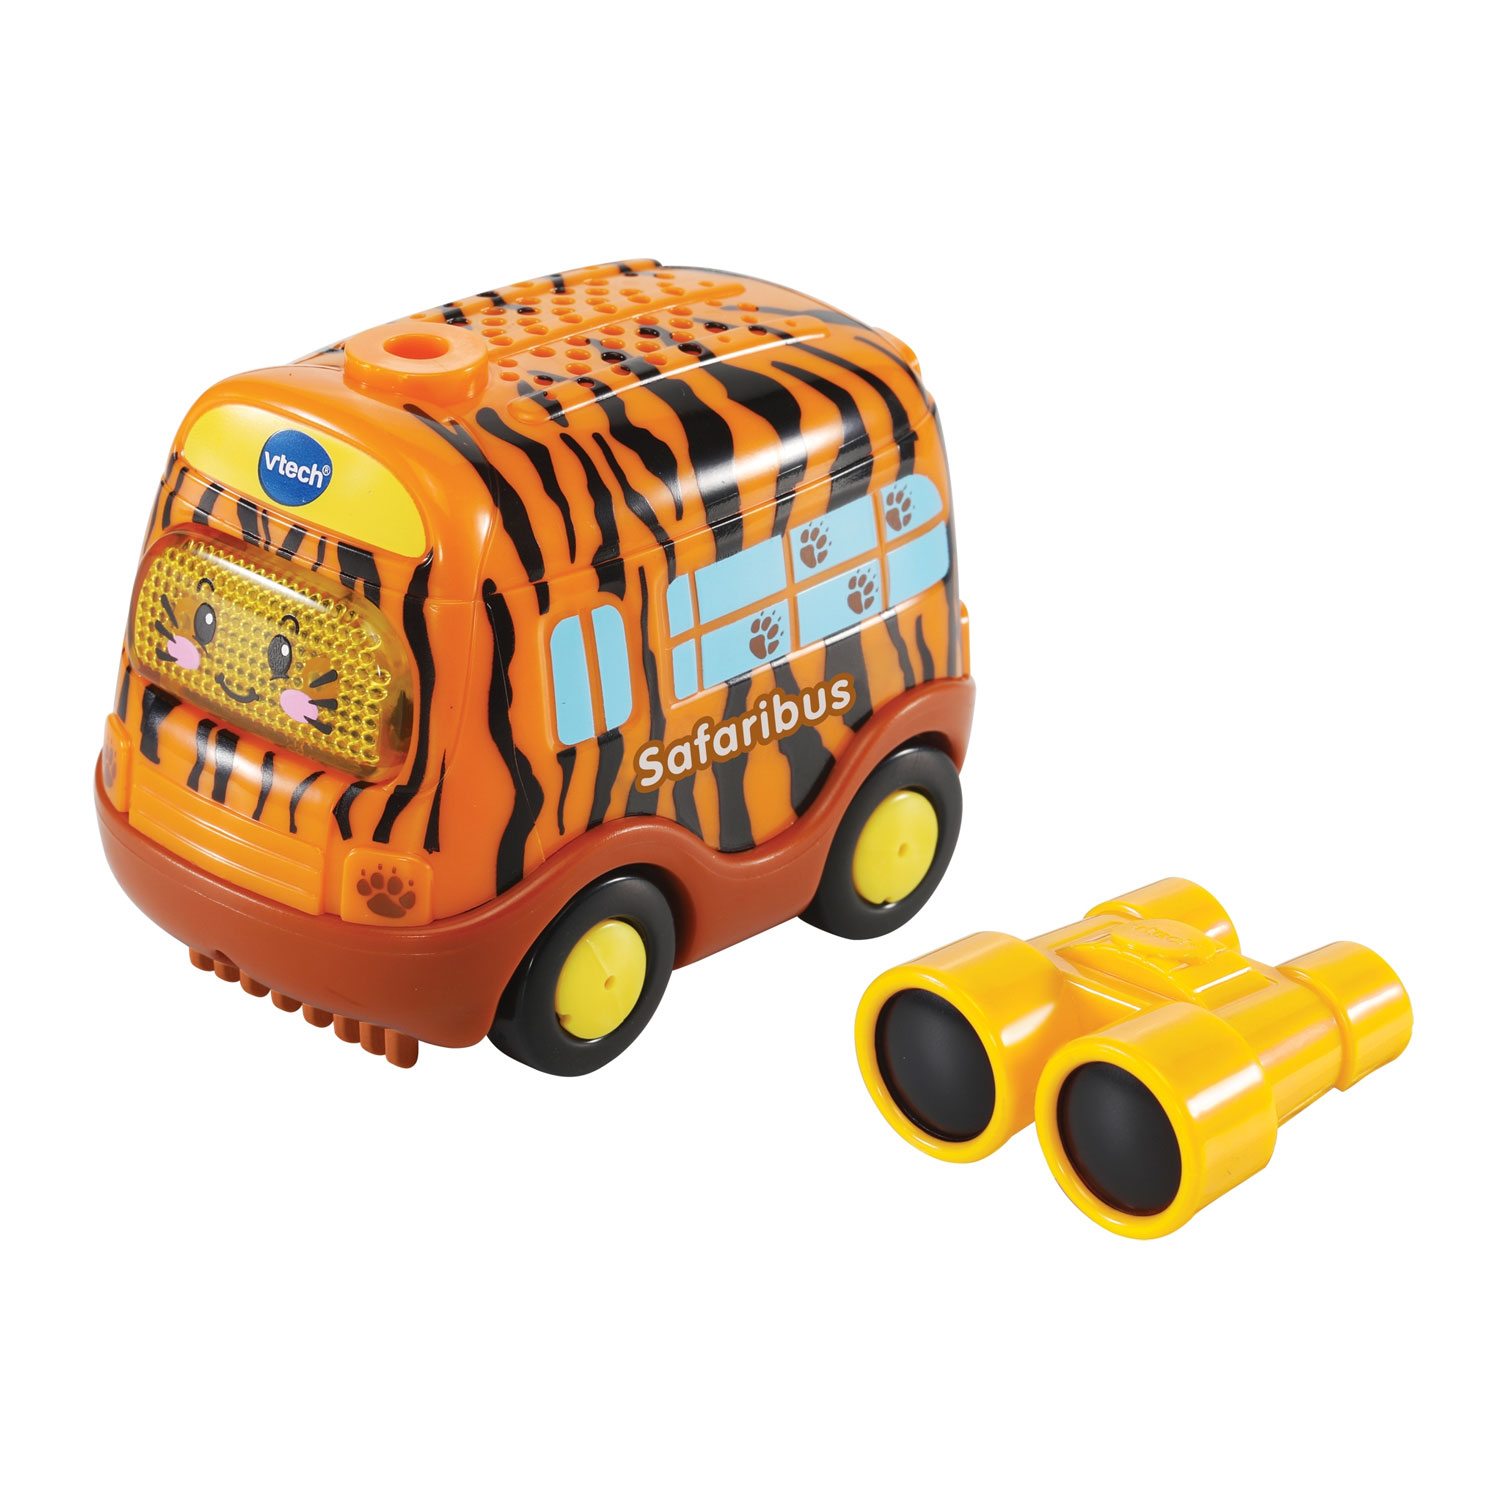 Aan het water Wizard Mier VTech Toet Toet Cars - Special Siem Safaribus | Thimble Toys